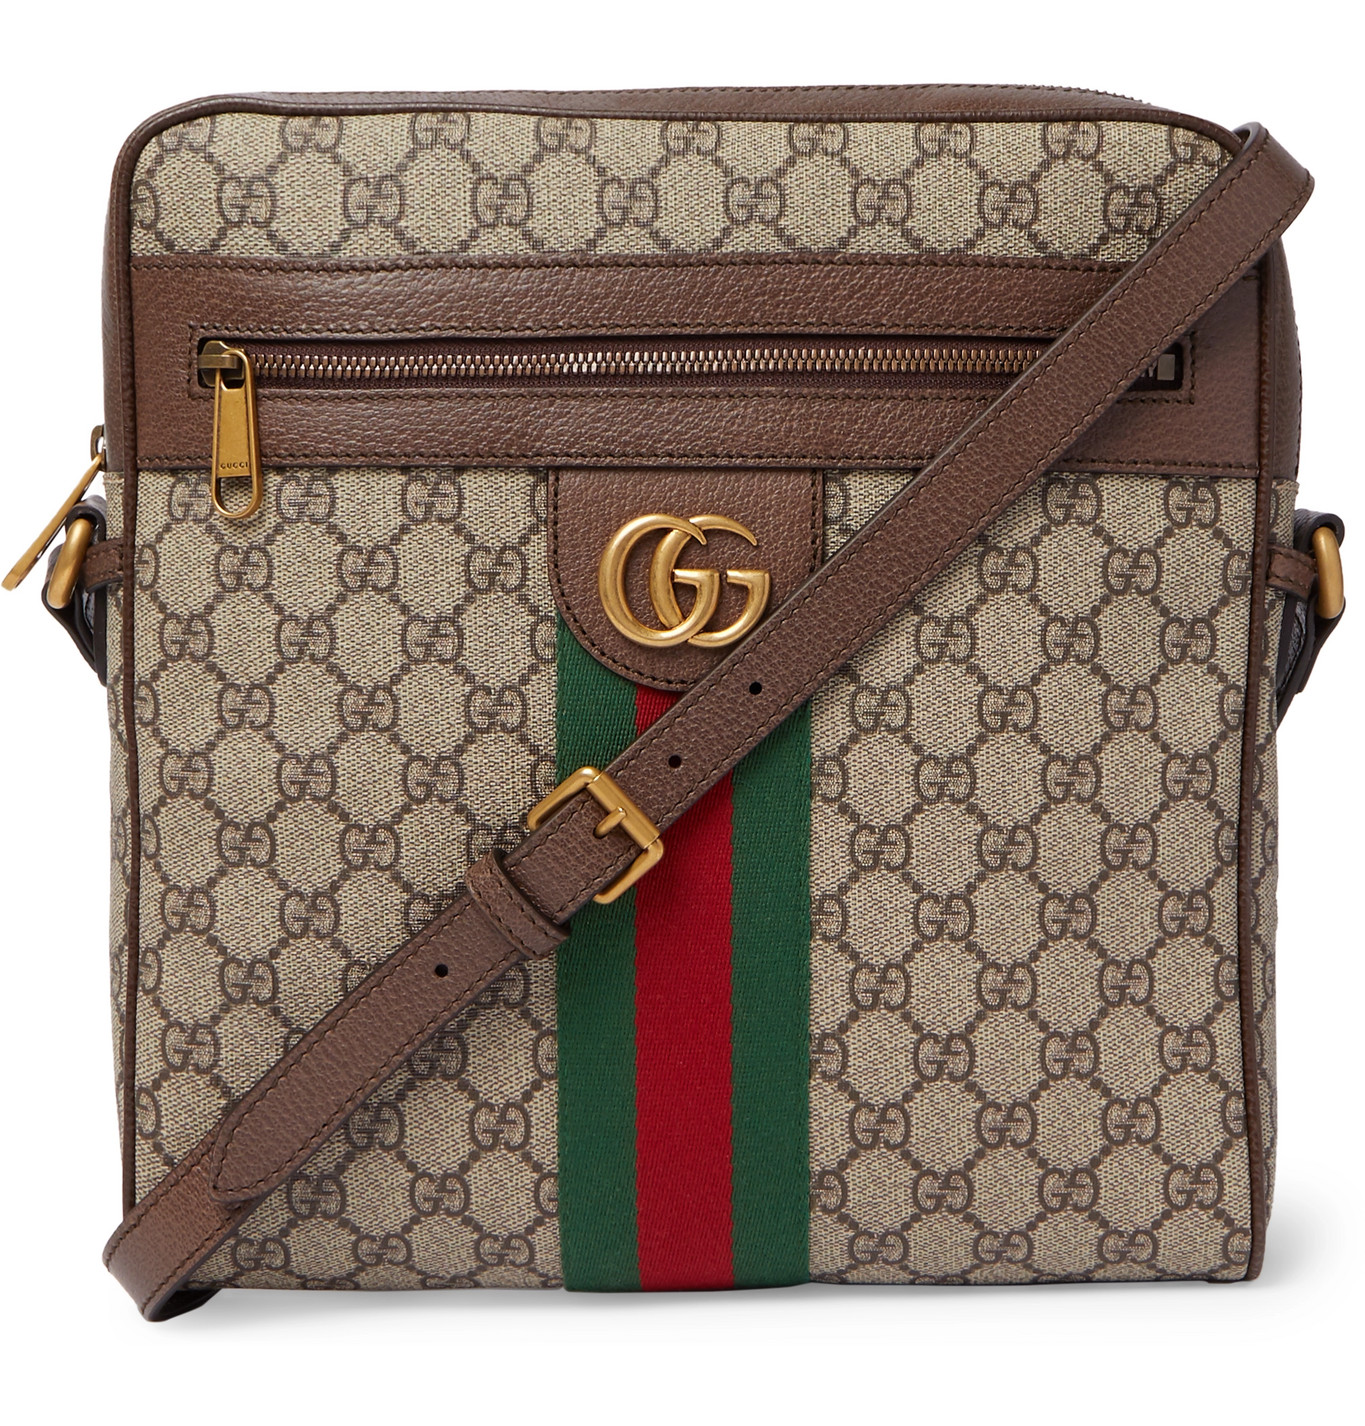 Gucci - Ophidia Medium Leather-Trimmed Monogrammed Coated-Canvas Messenger Bag - Men - Brown ...